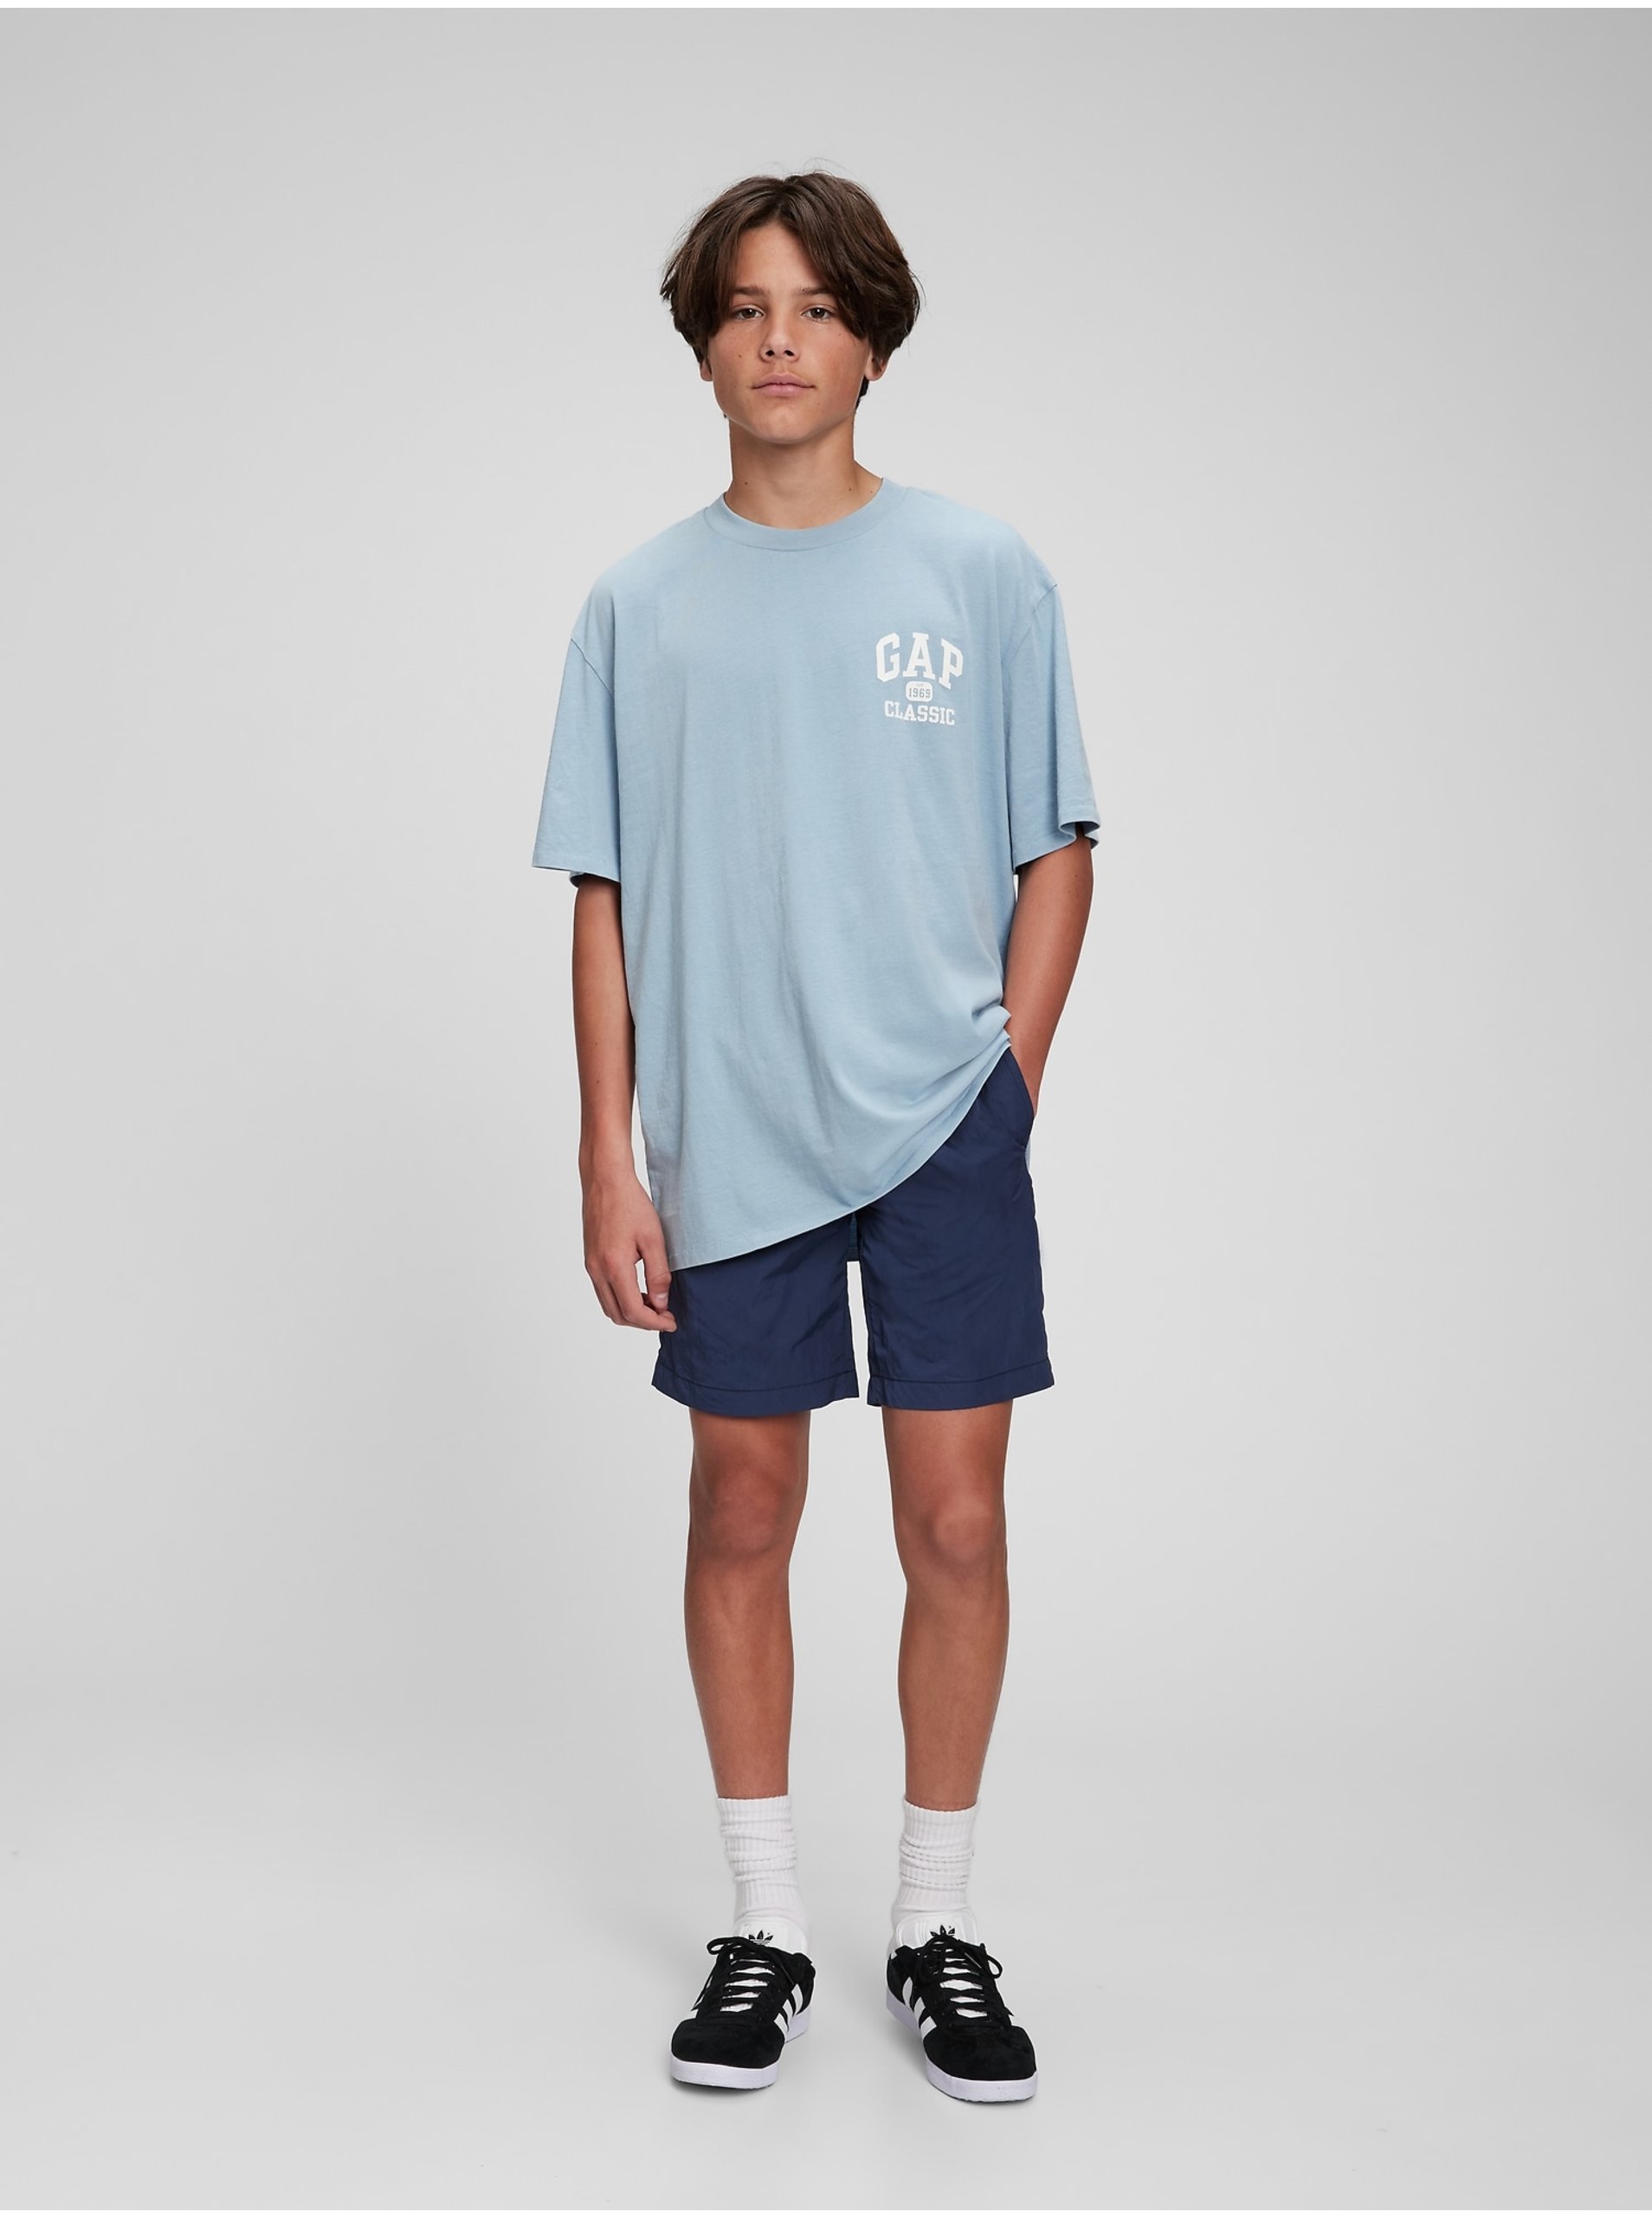 E-shop Modré klučičí tričko Teen organic GAP